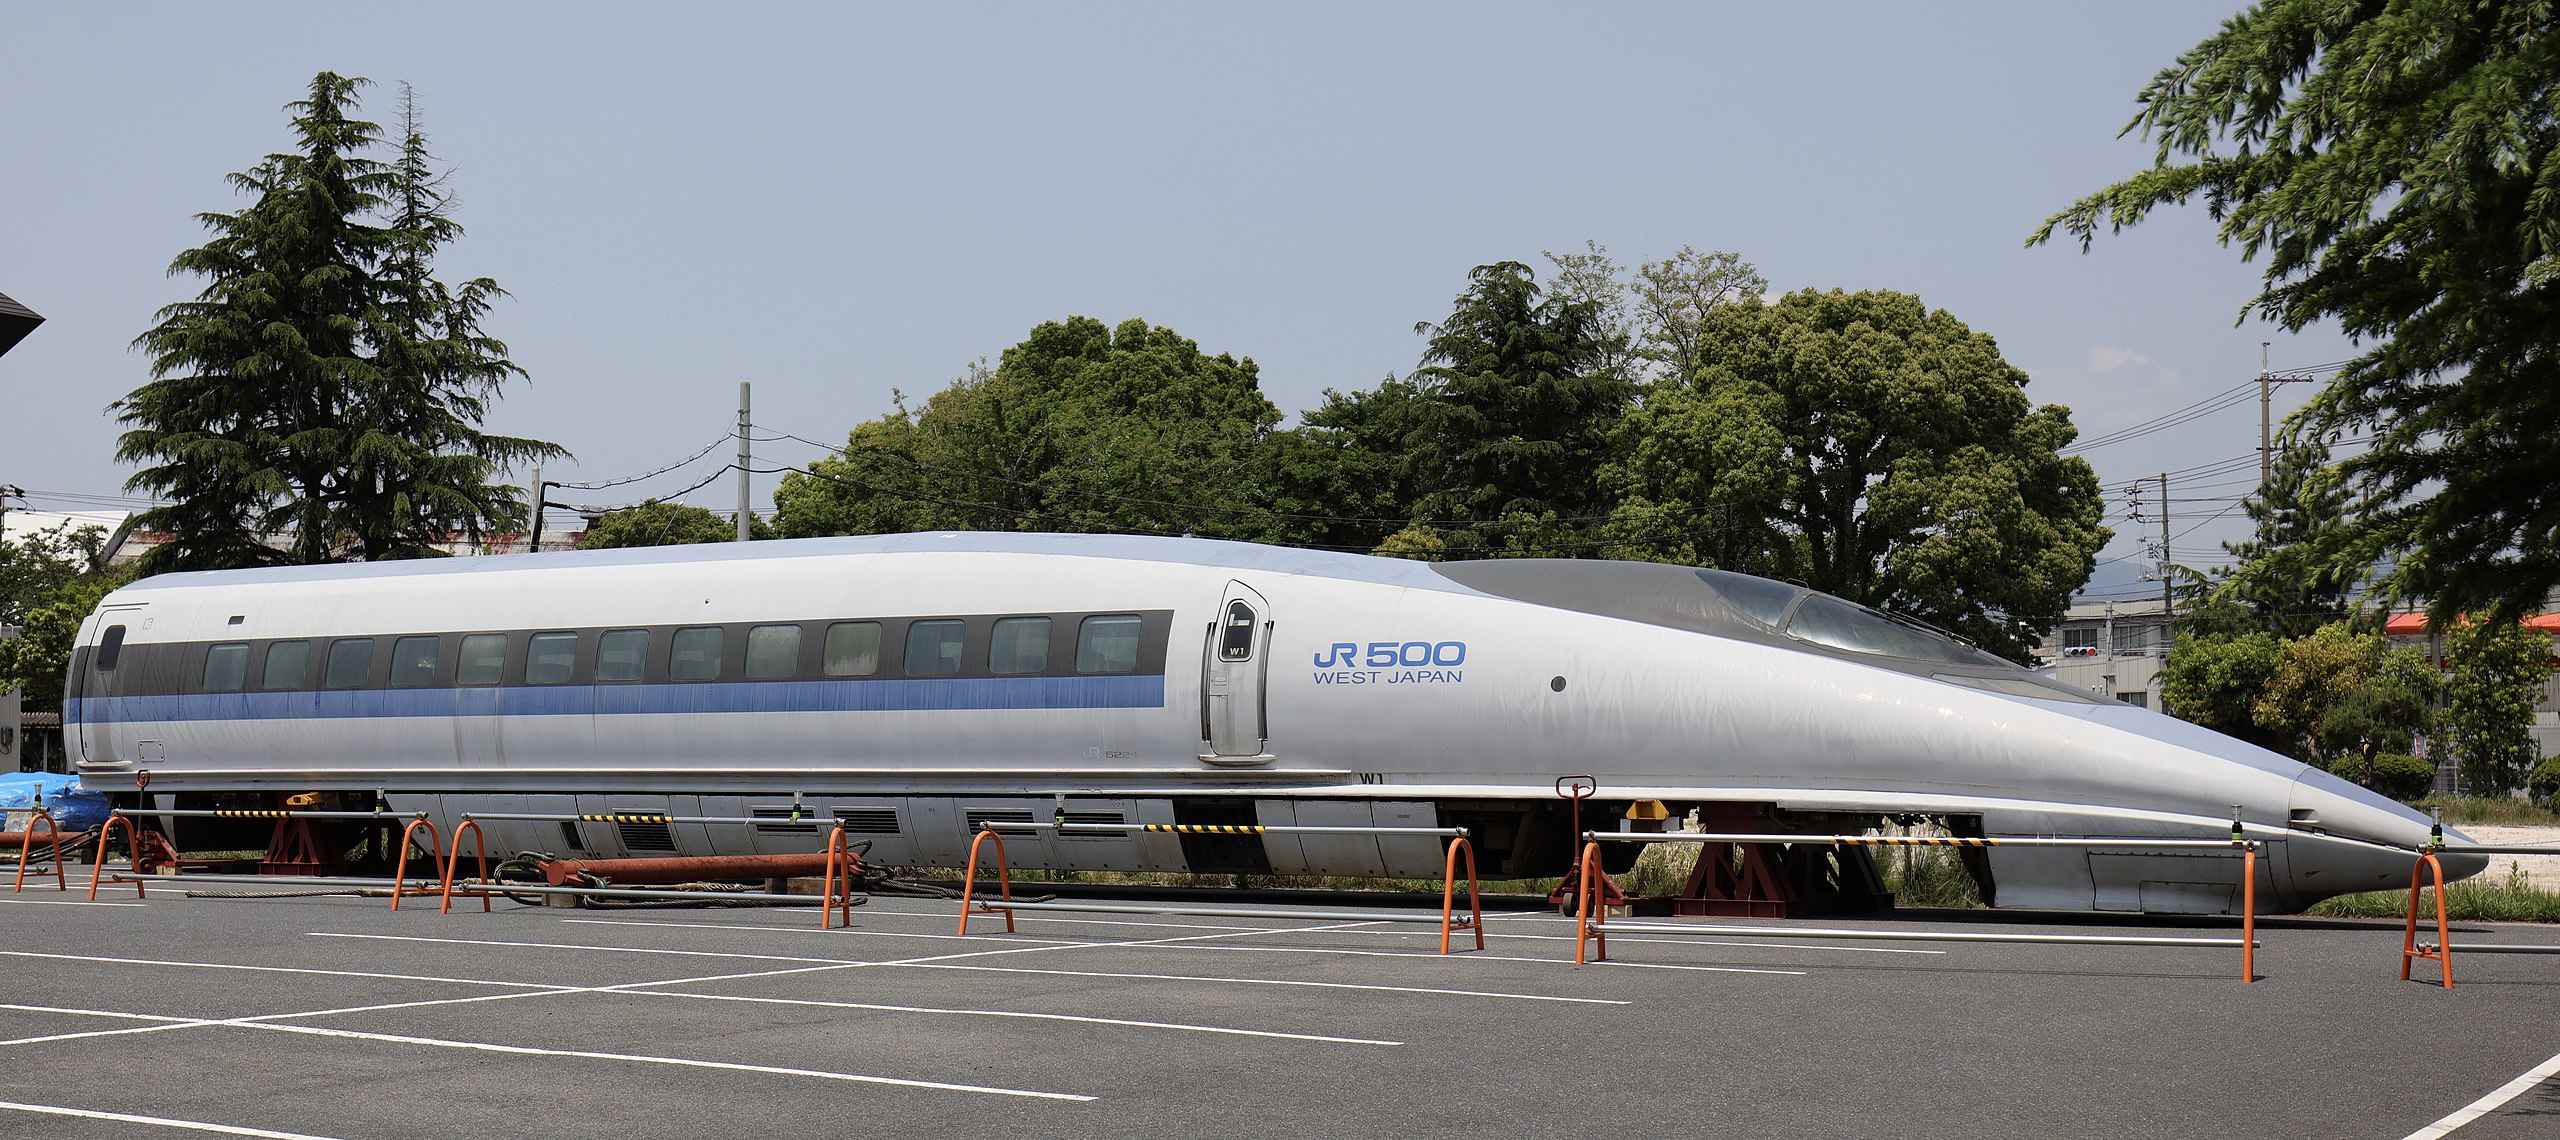 File:Shinkansen Series 500 522-1 in Hitachi.jpg - Wikimedia Commons